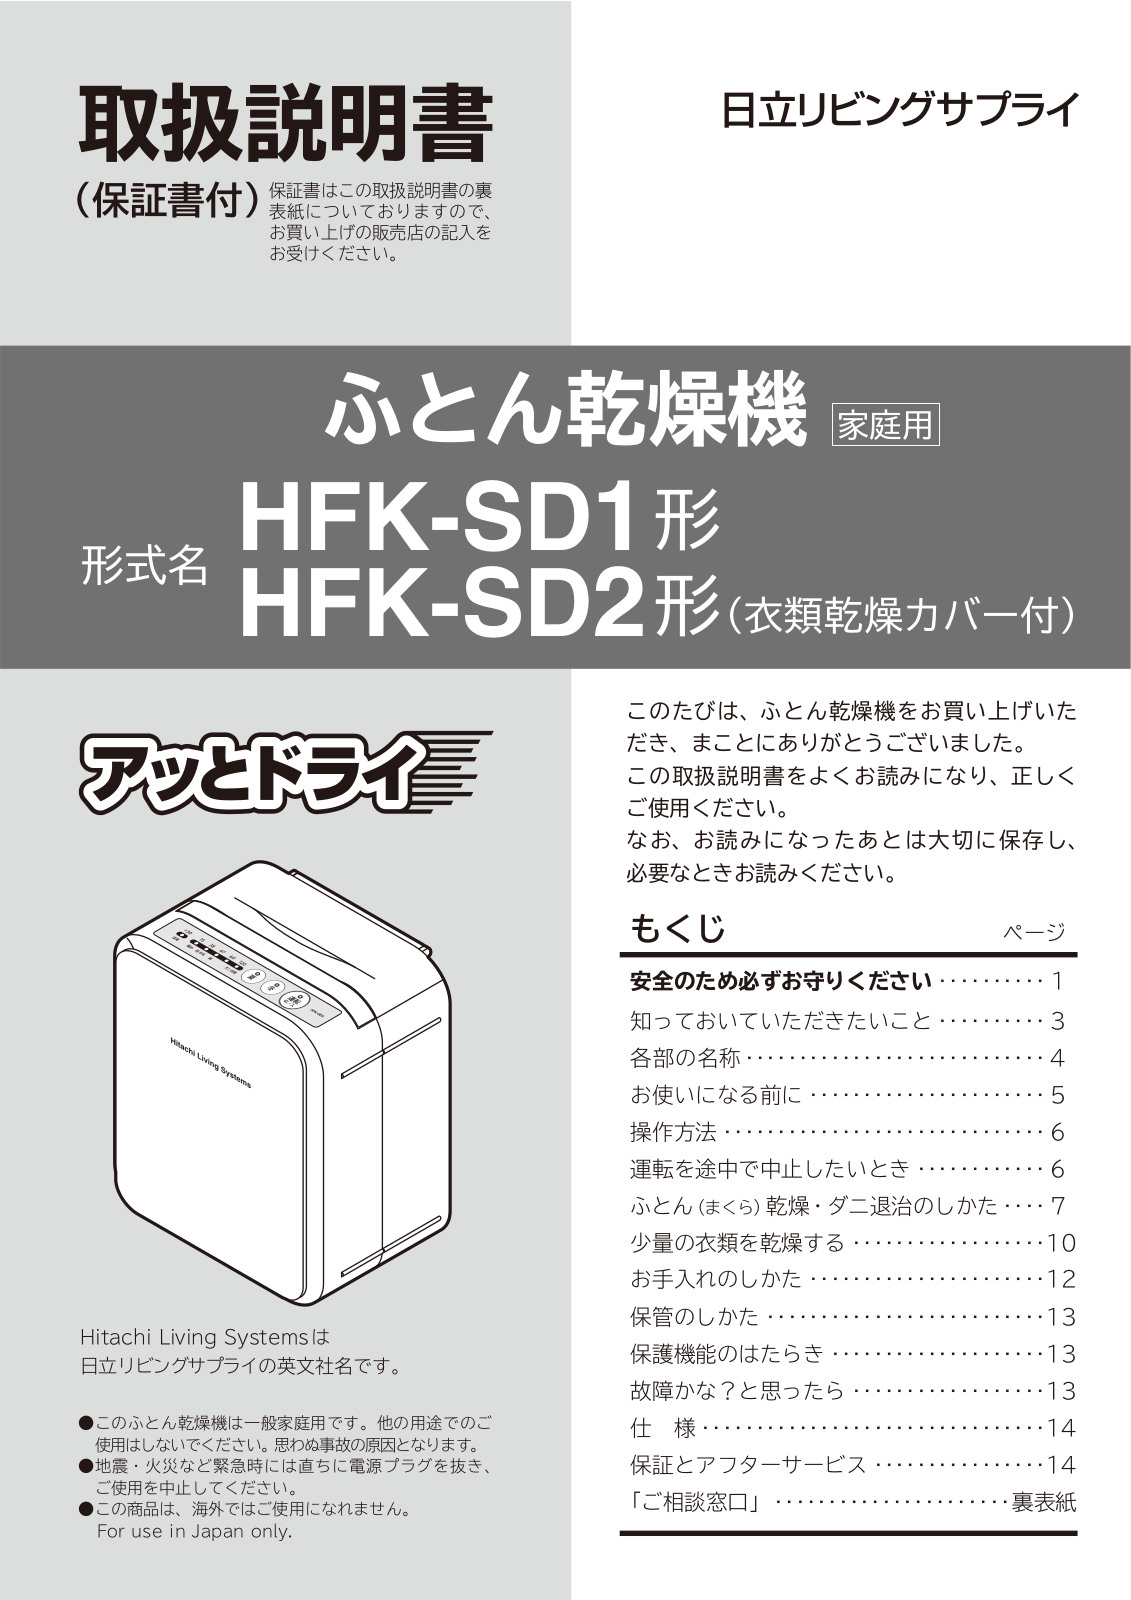 Hitachi HFK-SD1, HFK-SD2 User guide